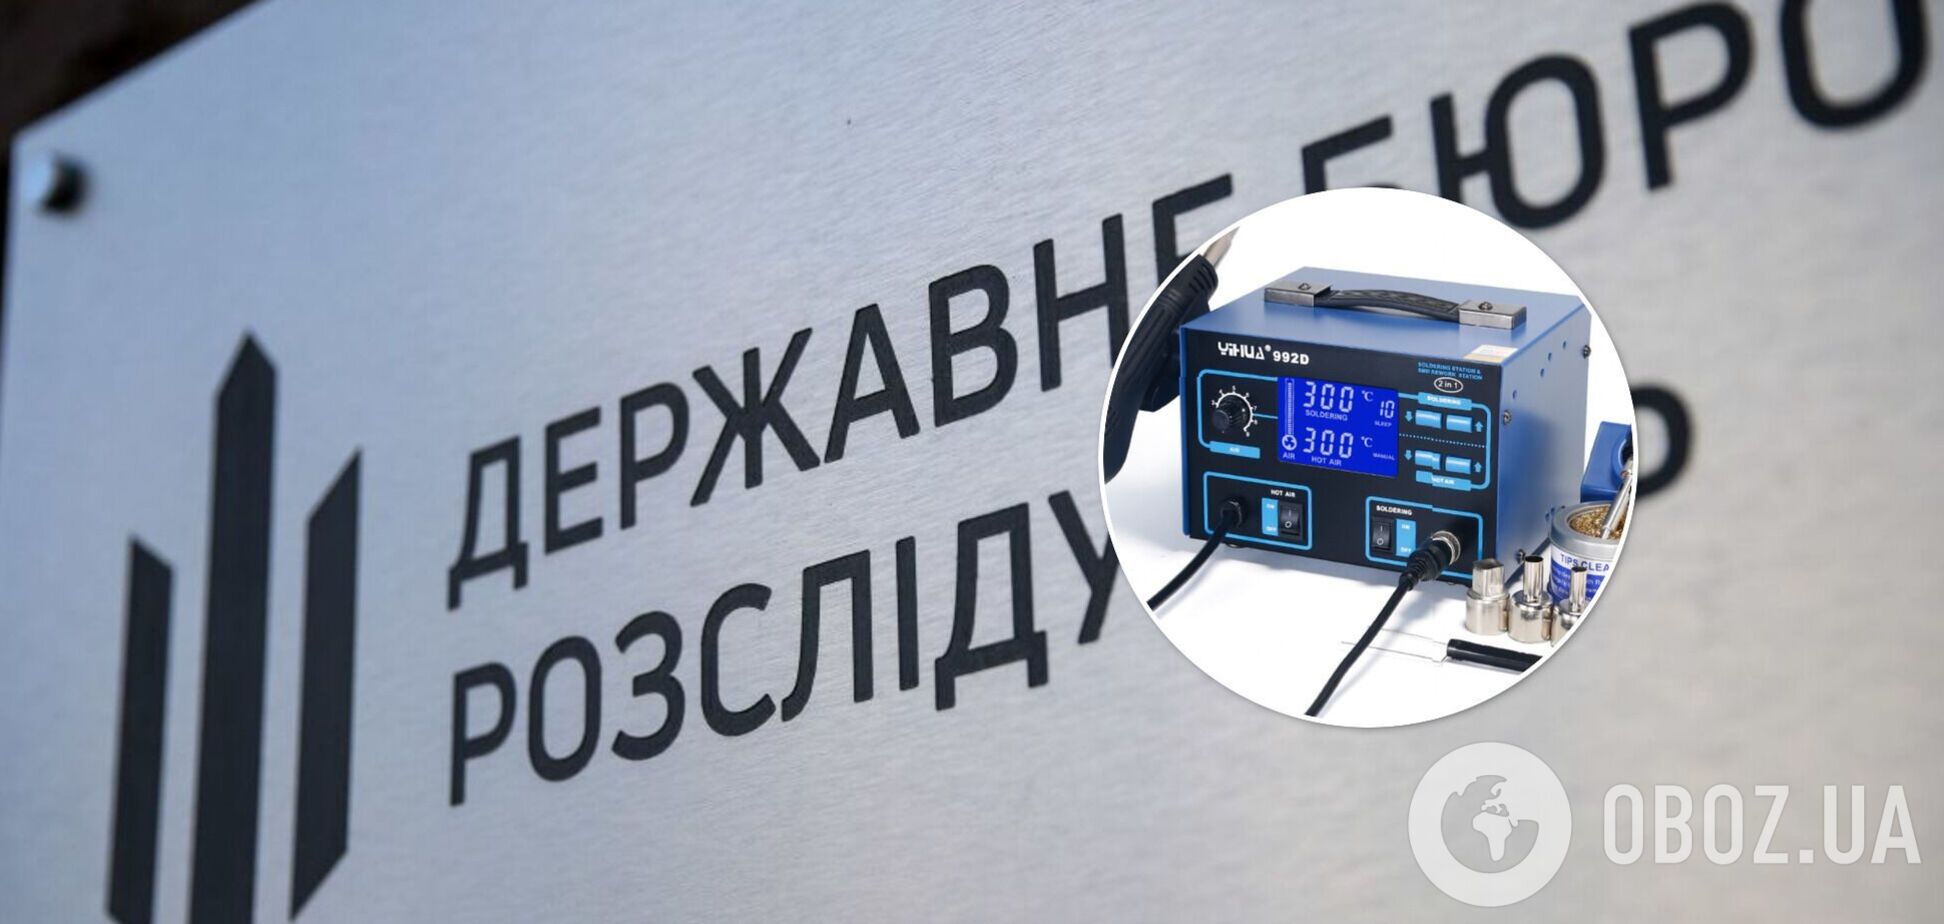 ГБР объявило тендер на покупку паяльной станции за 9 тысяч гривен